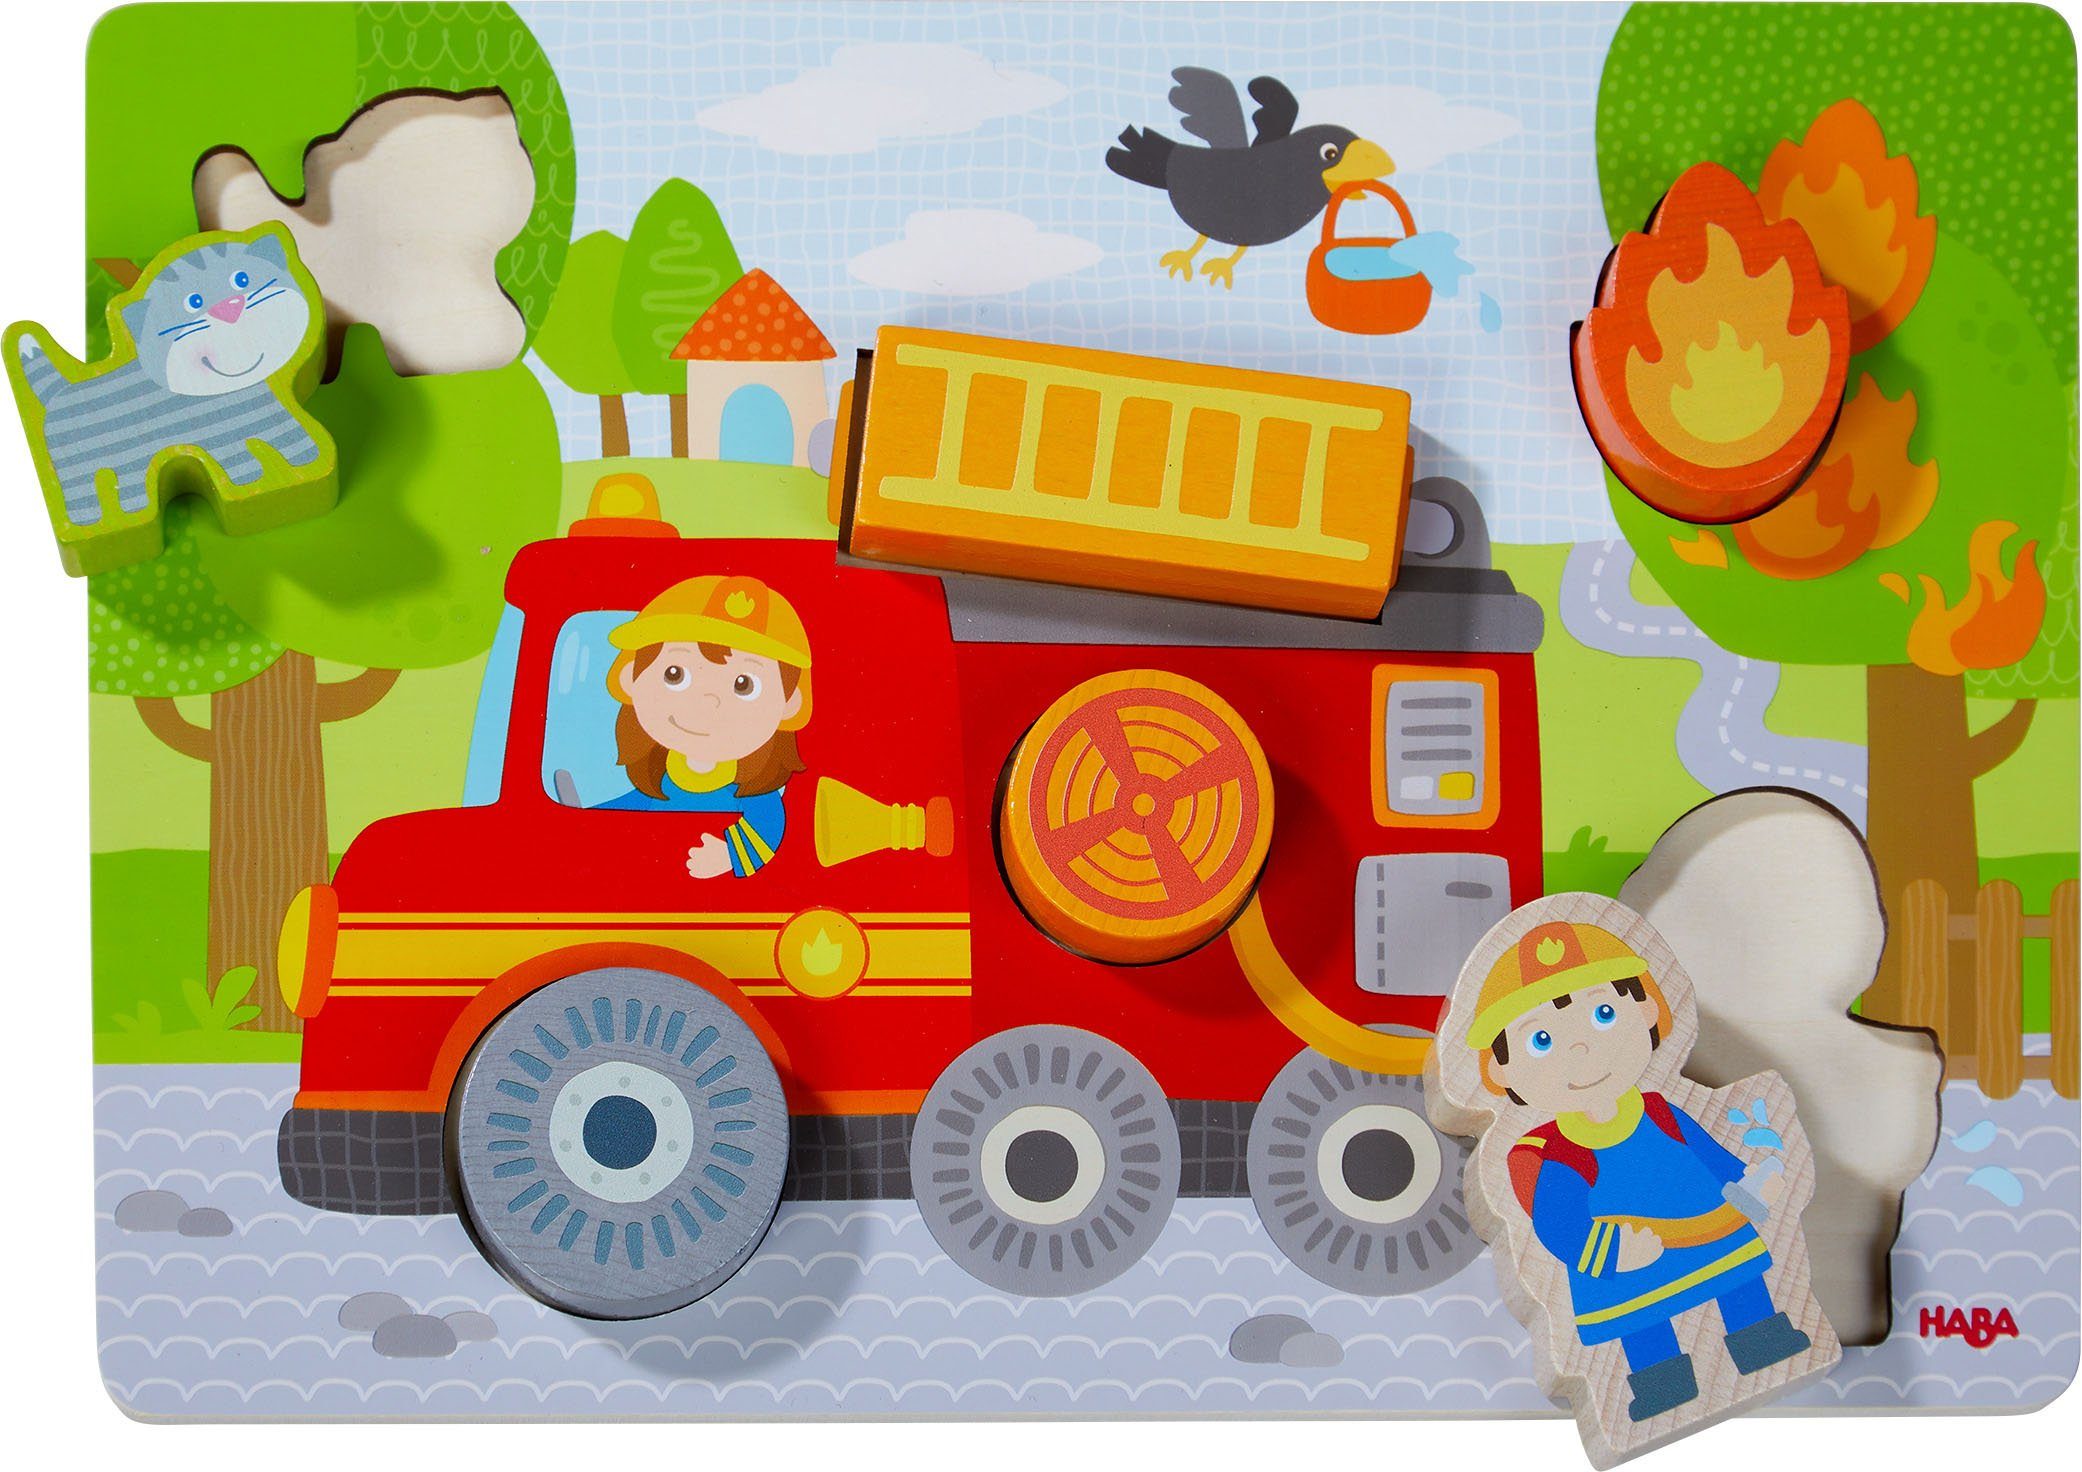 Haba Steckpuzzle Holzspielzeug, Feuerwehrauto, aus Puzzleteile, 7 Holz